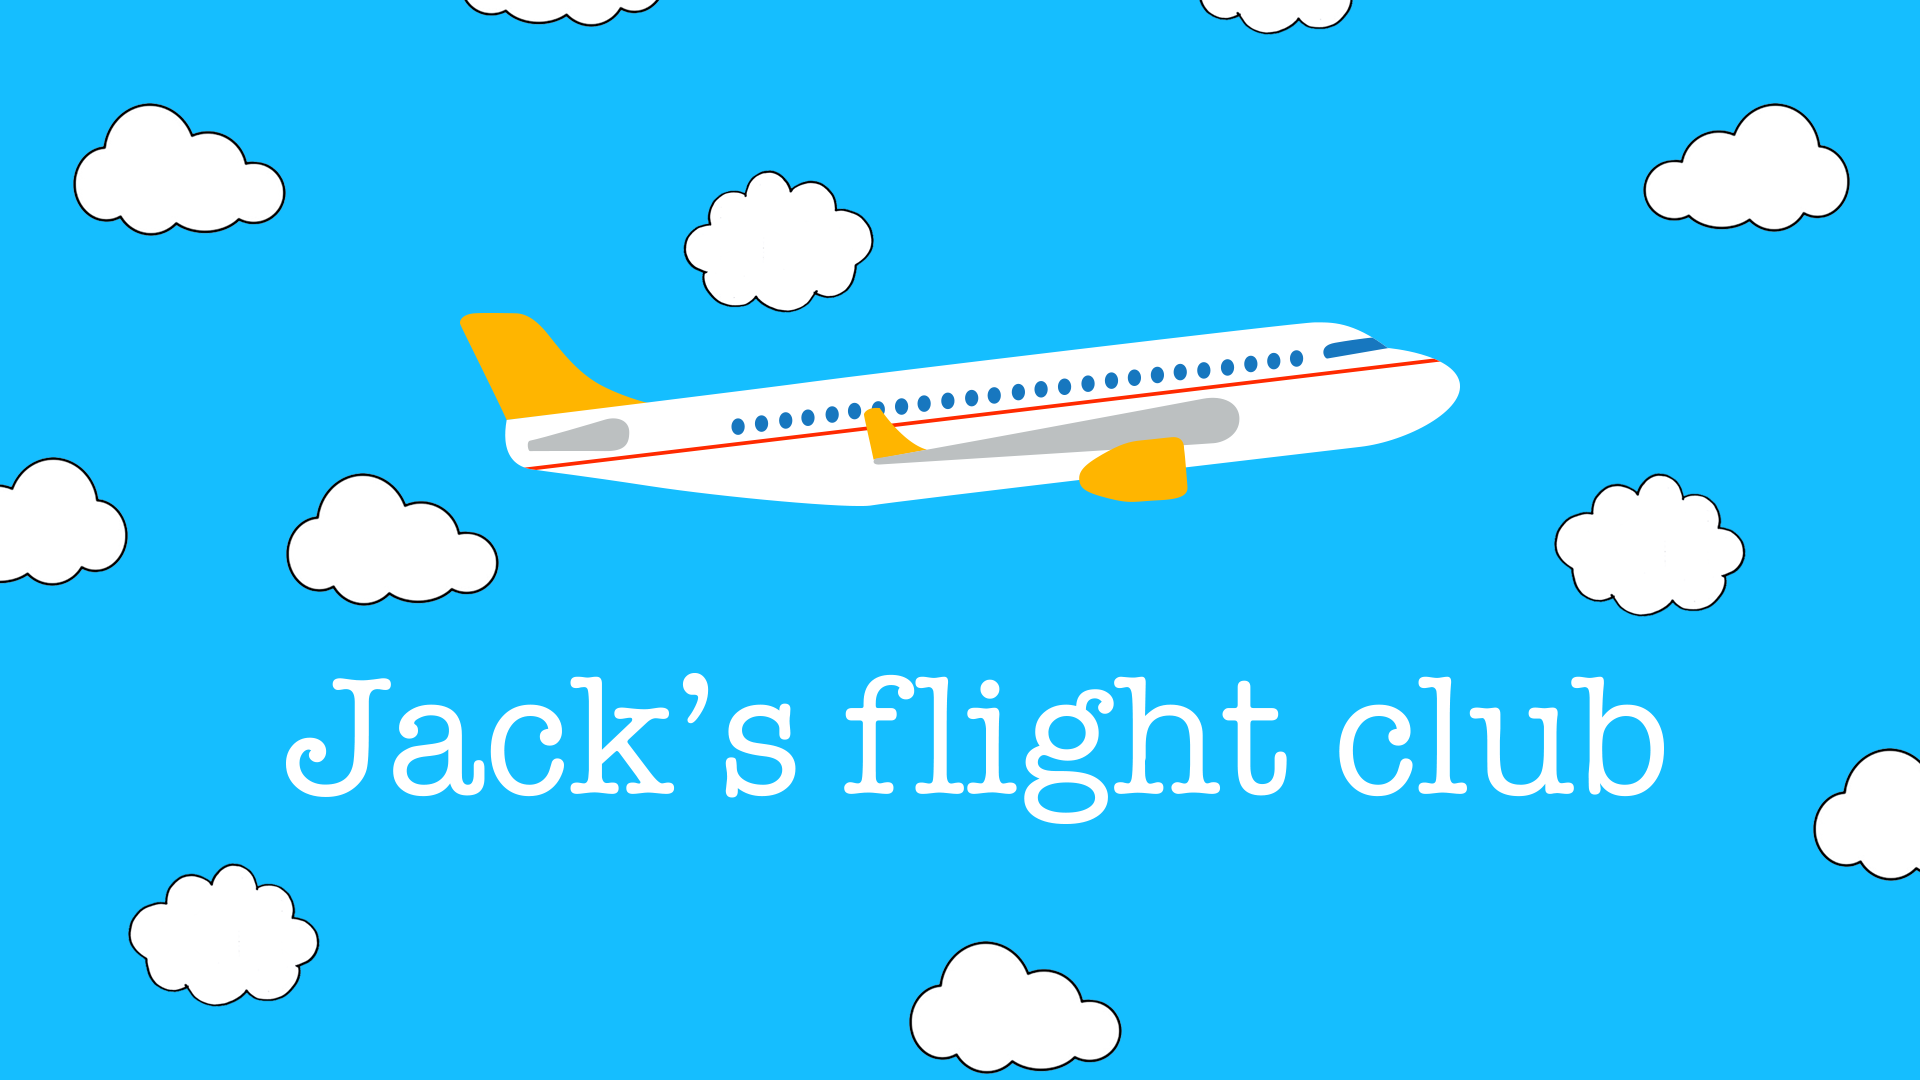 Jacks flight club